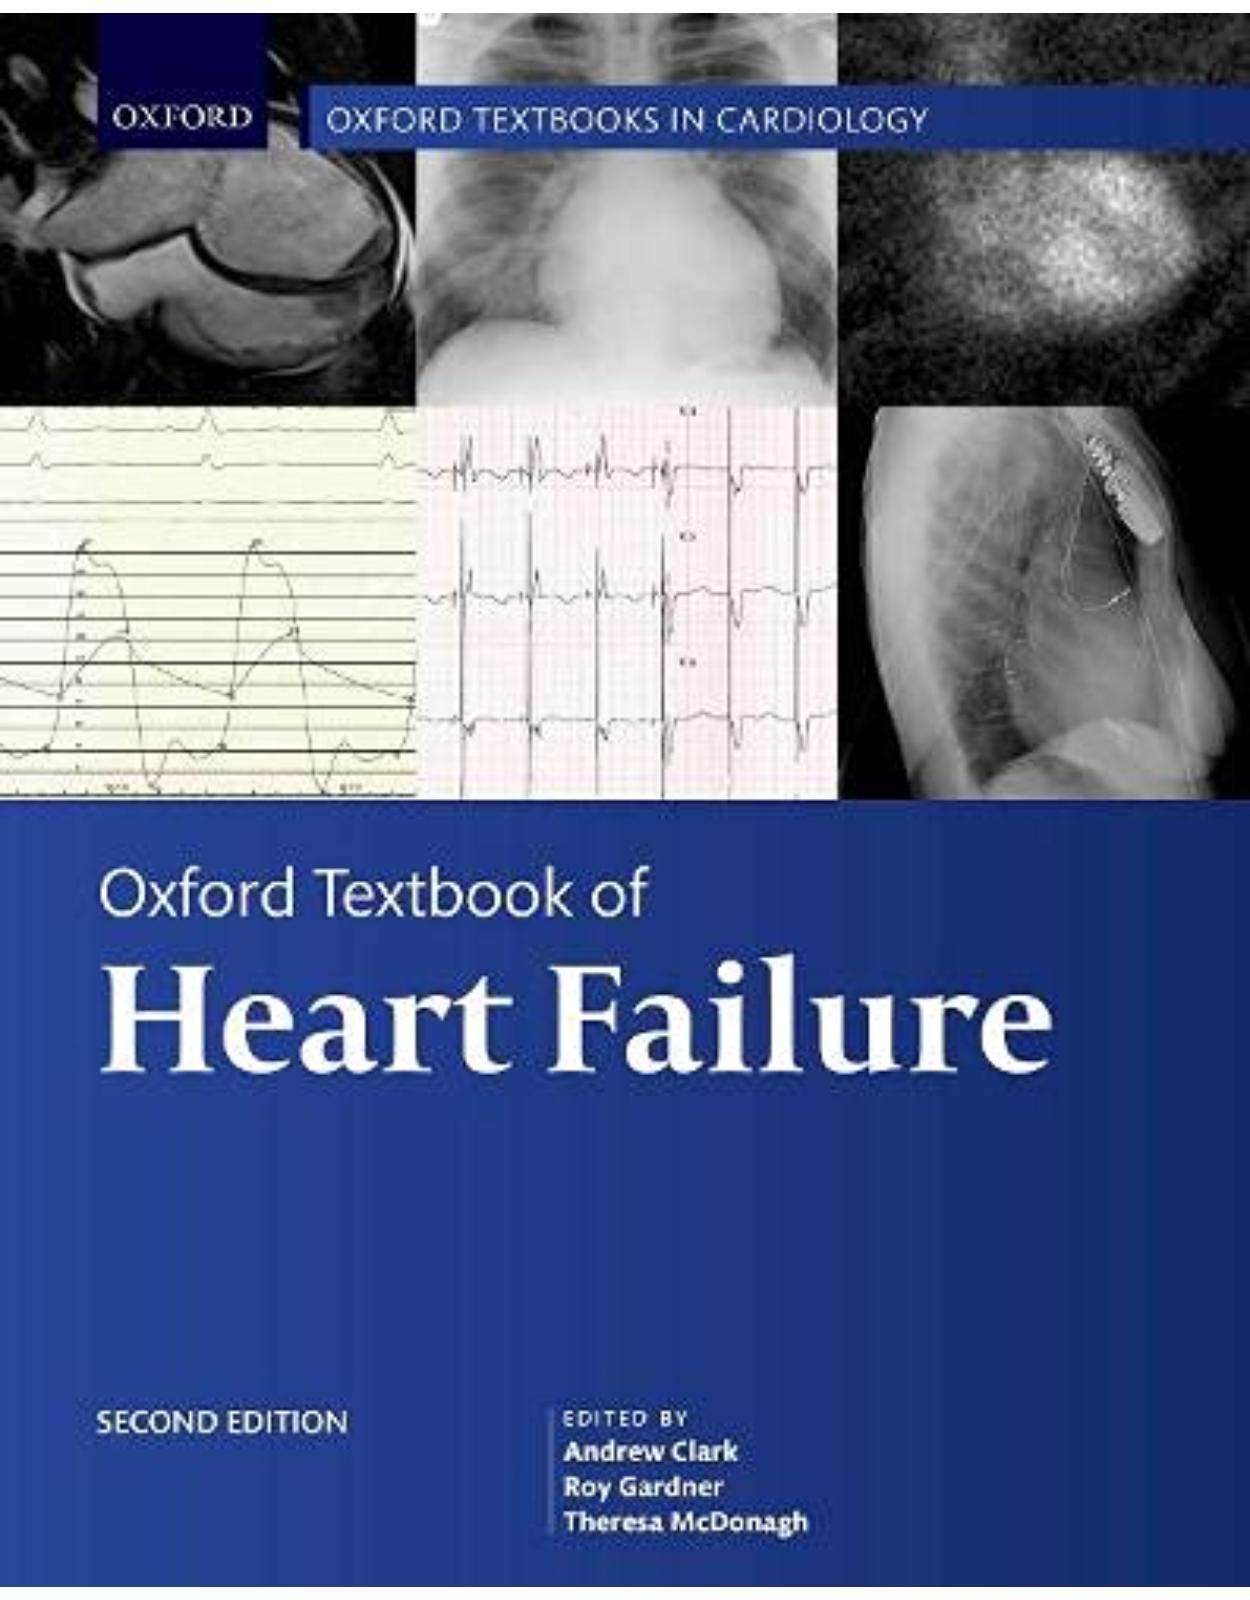 Oxford Textbook of Heart Failure